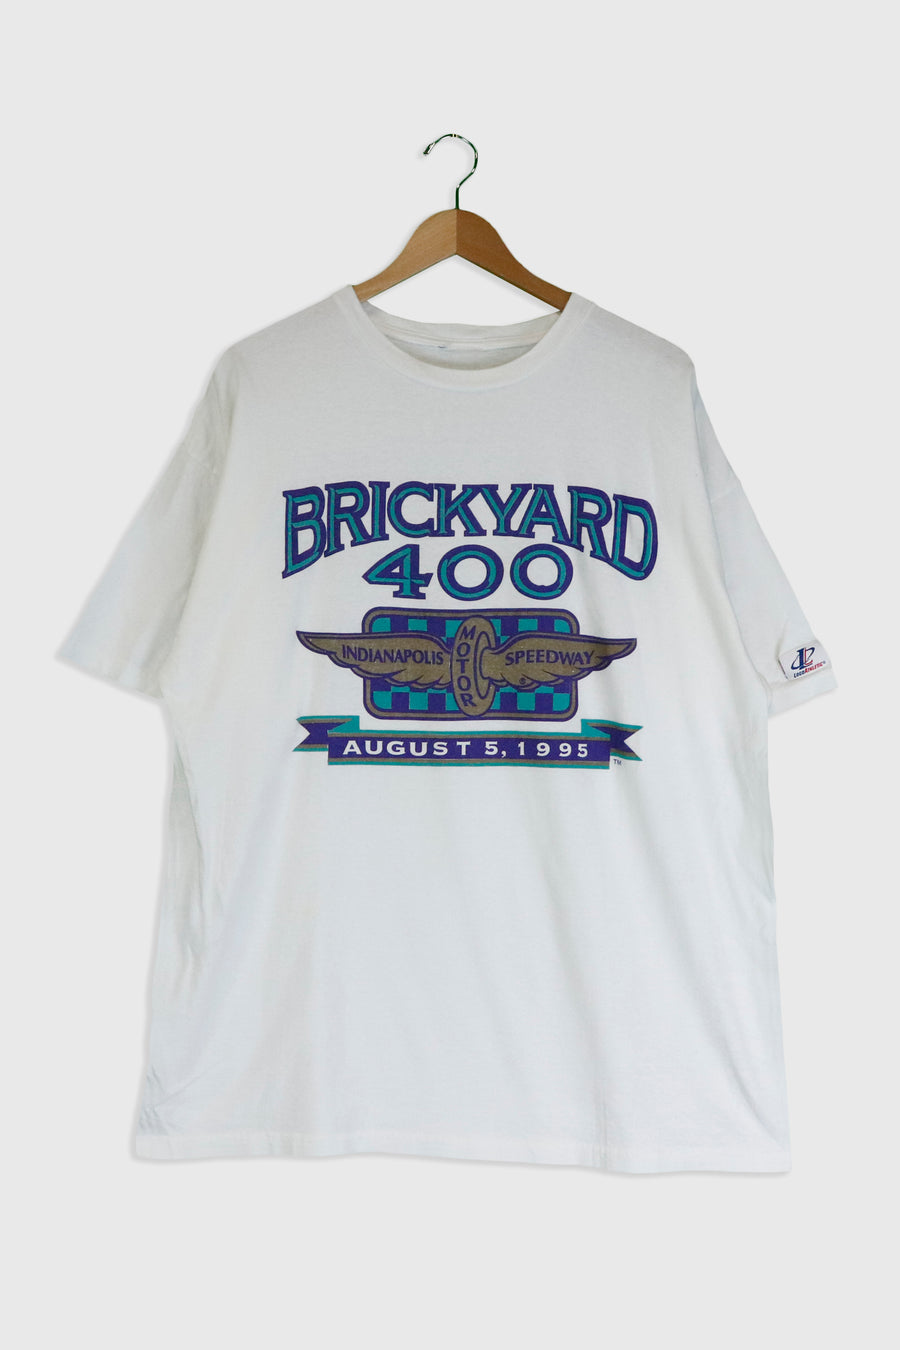 Vintage 1995 Brickyard 400 Speedway T Shirt Sz XL